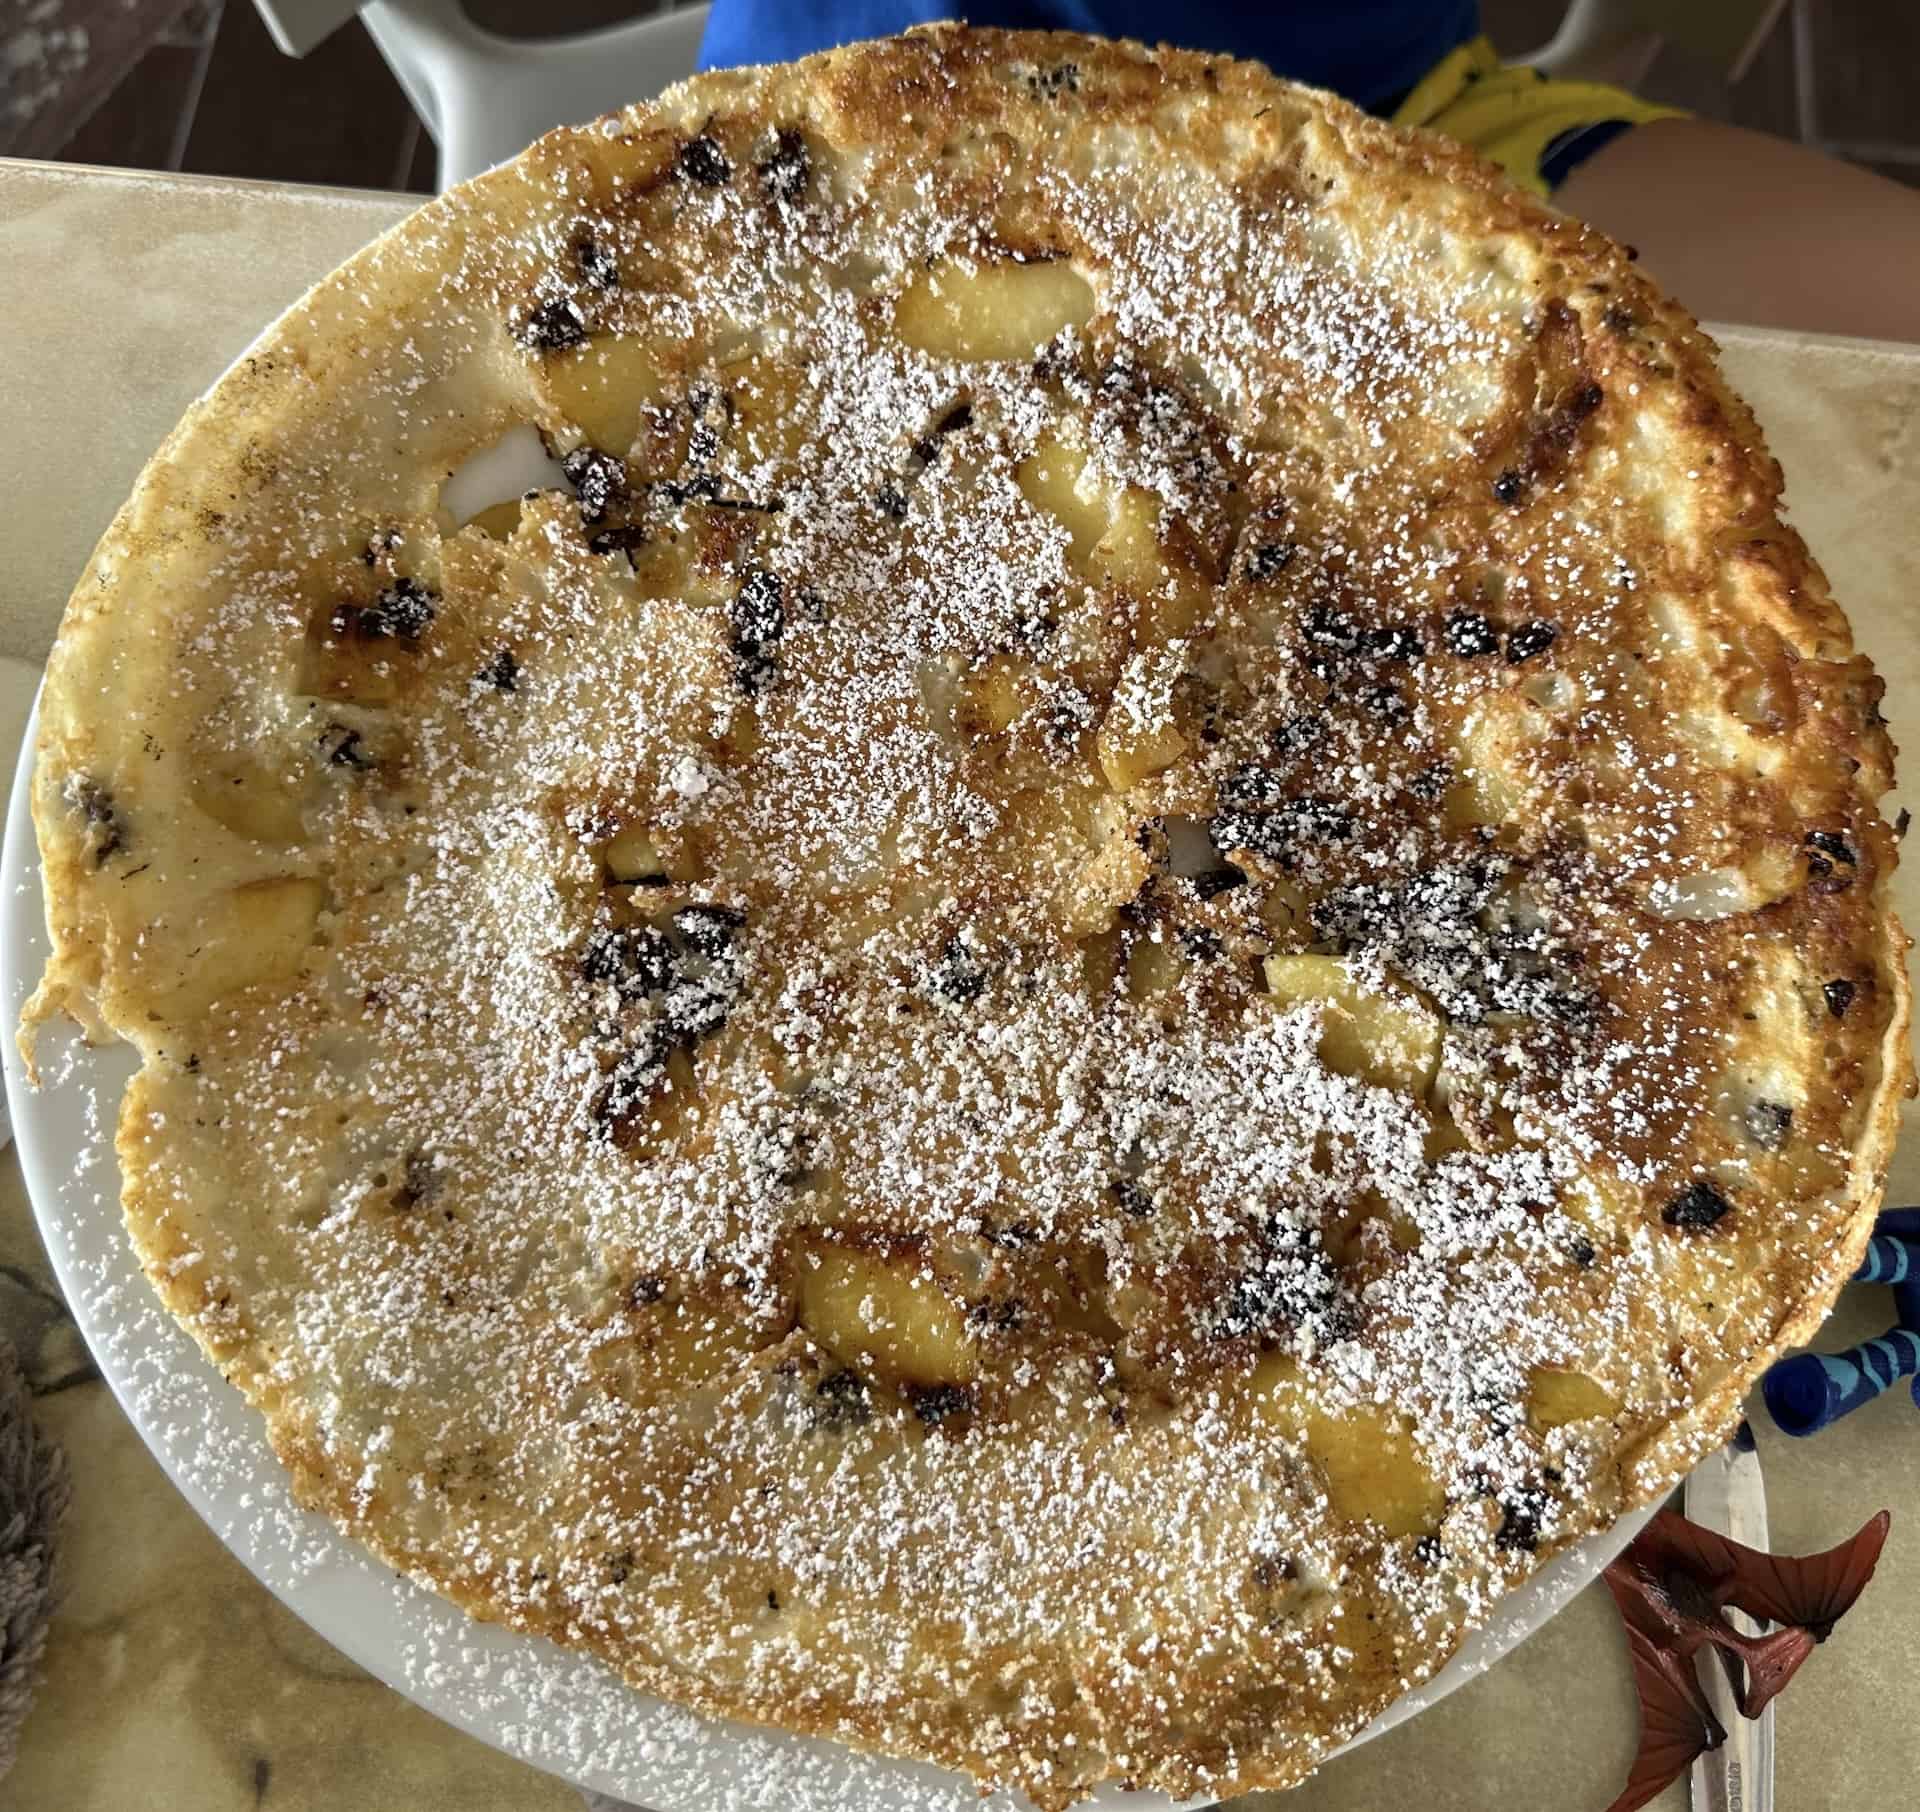 Apple and raisin pancake at Linda's Dutch Pancakes